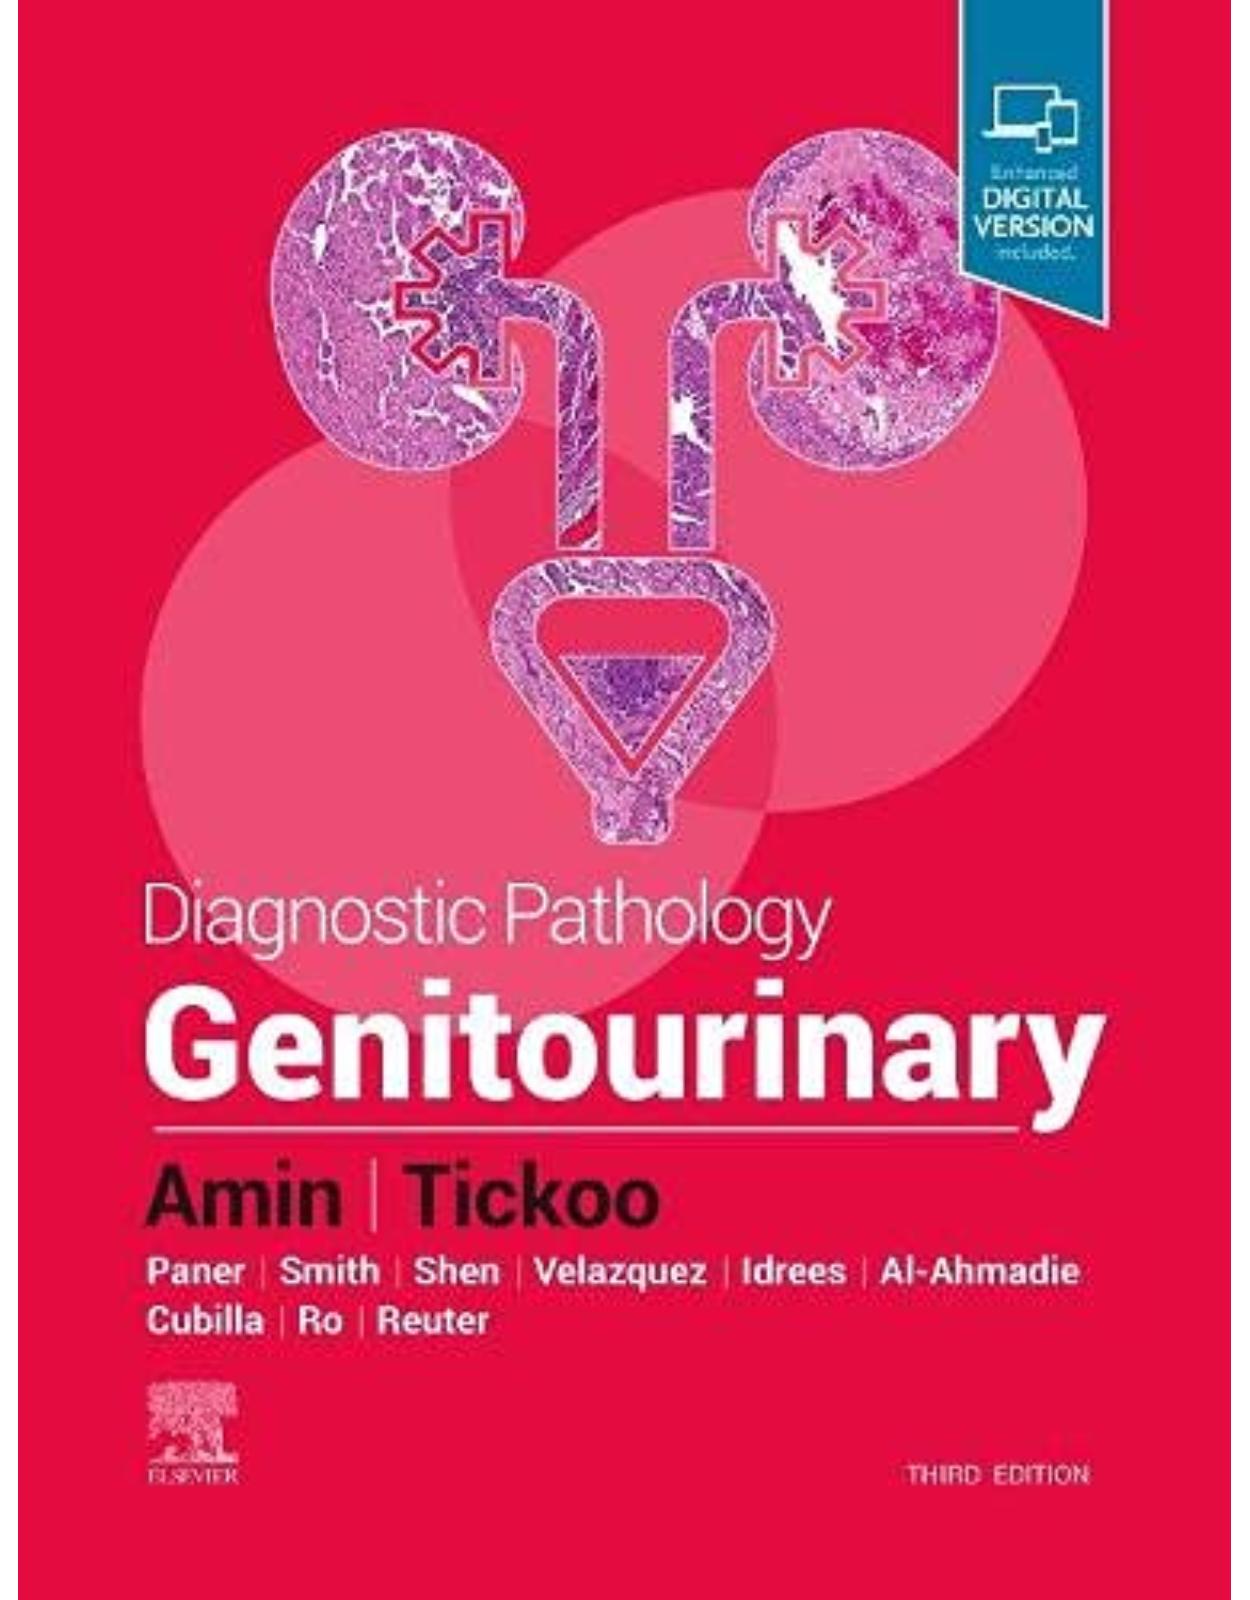 Diagnostic Pathology: Genitourinary, 3rd Edition